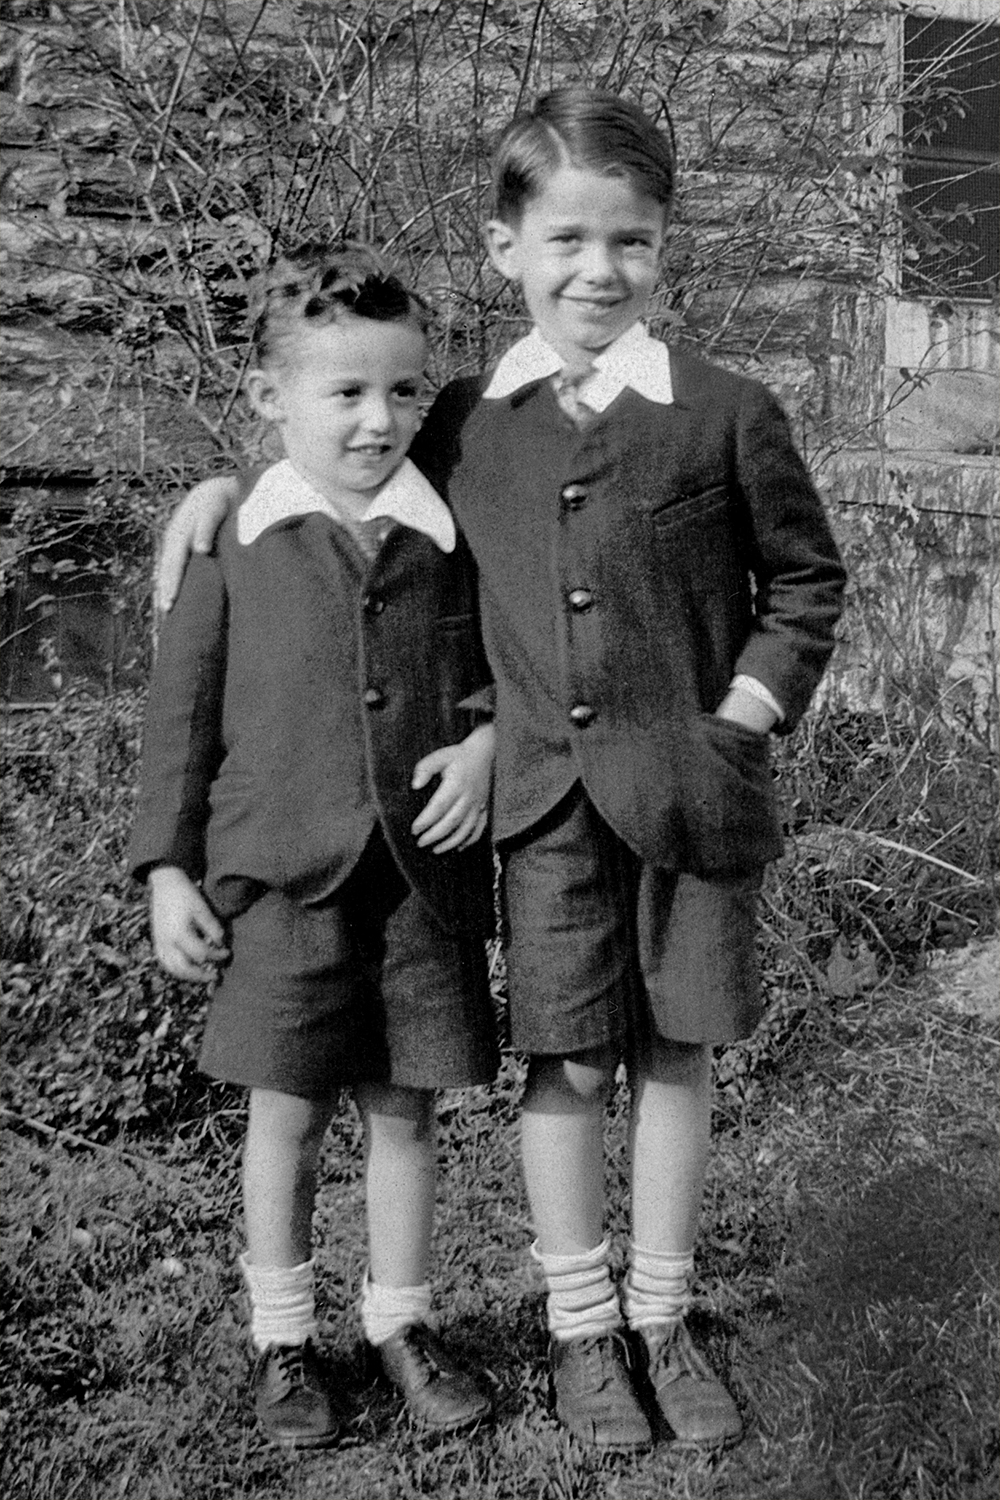 Richard and Buddy, 1932